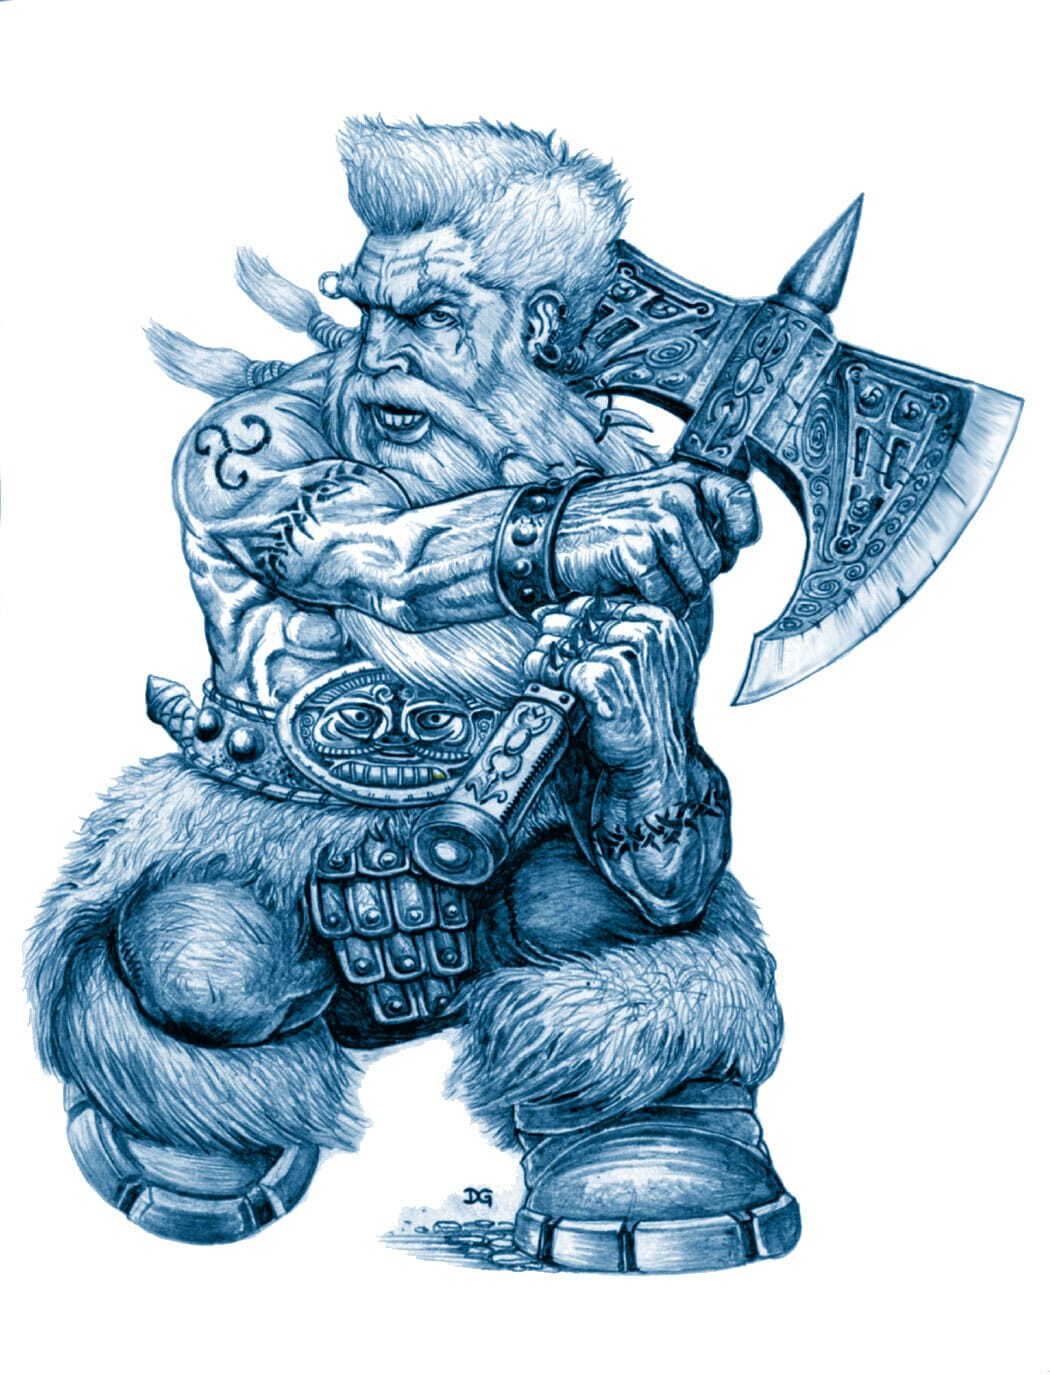 Sword Chronicle dwarf